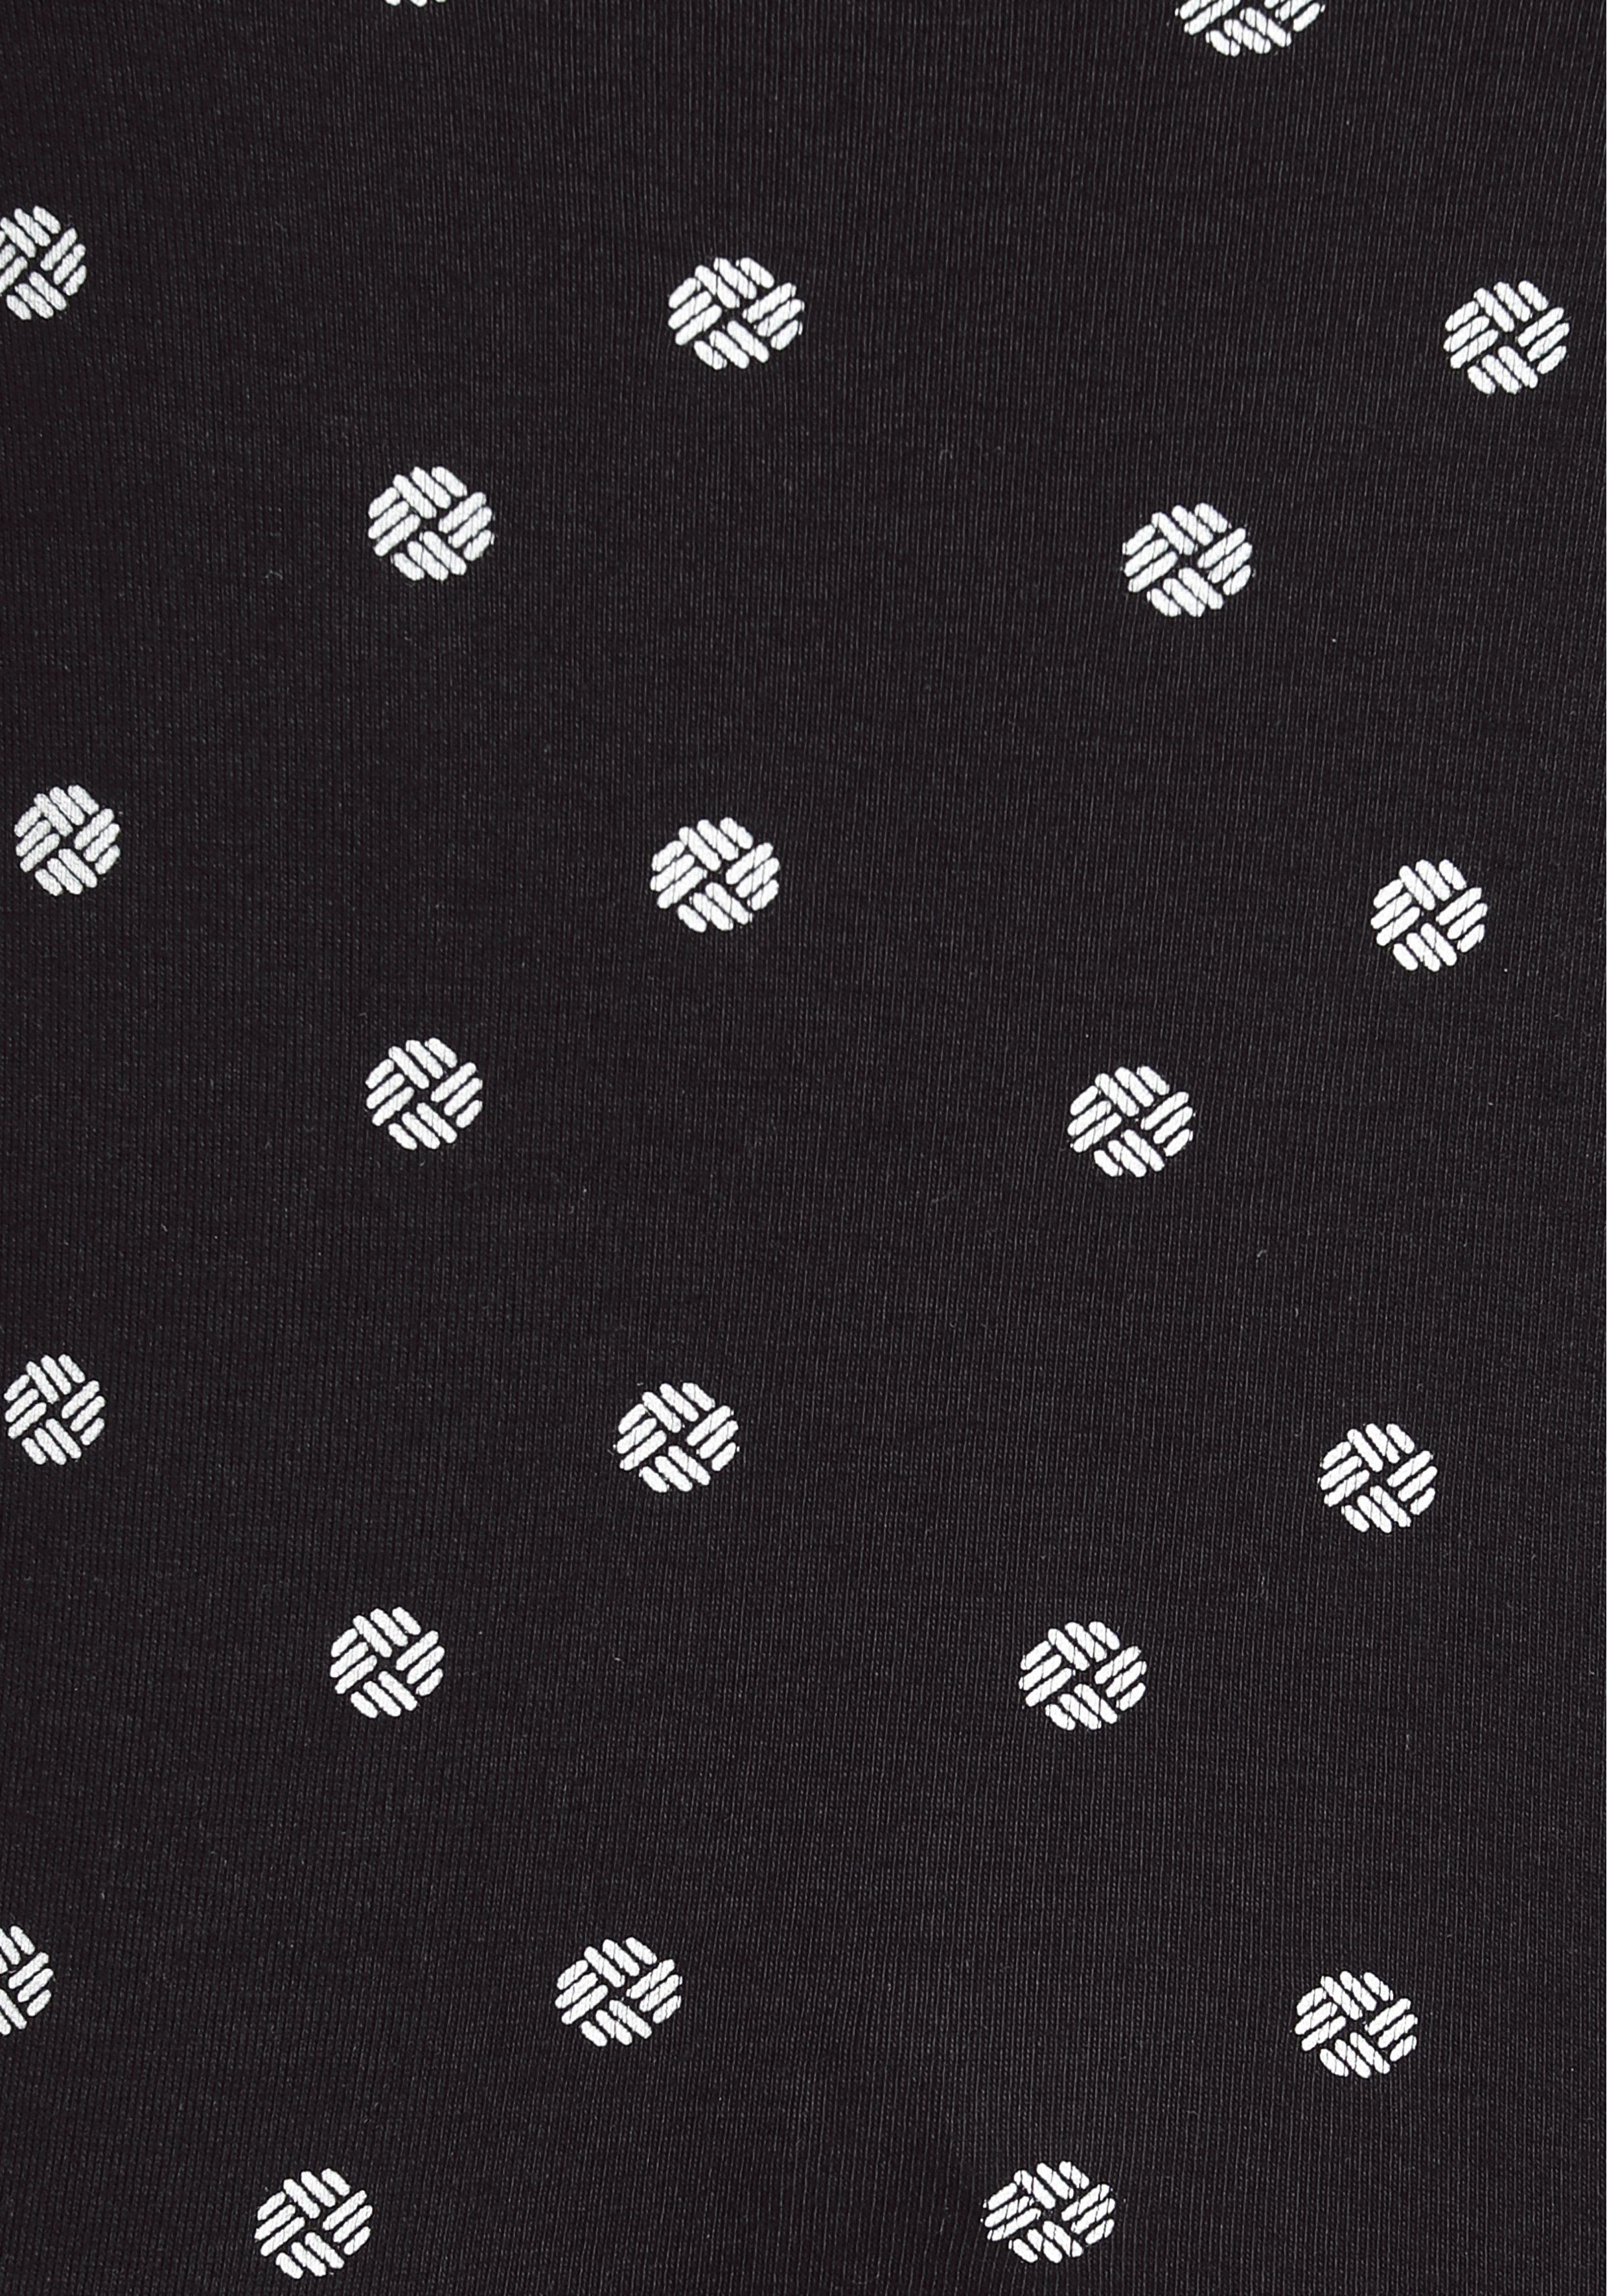 Flashlights Langarmshirt grau-meliert-schwarz-bedruckt, mit verschiedenen (Packung, 2er-Pack) grau Printmotiven